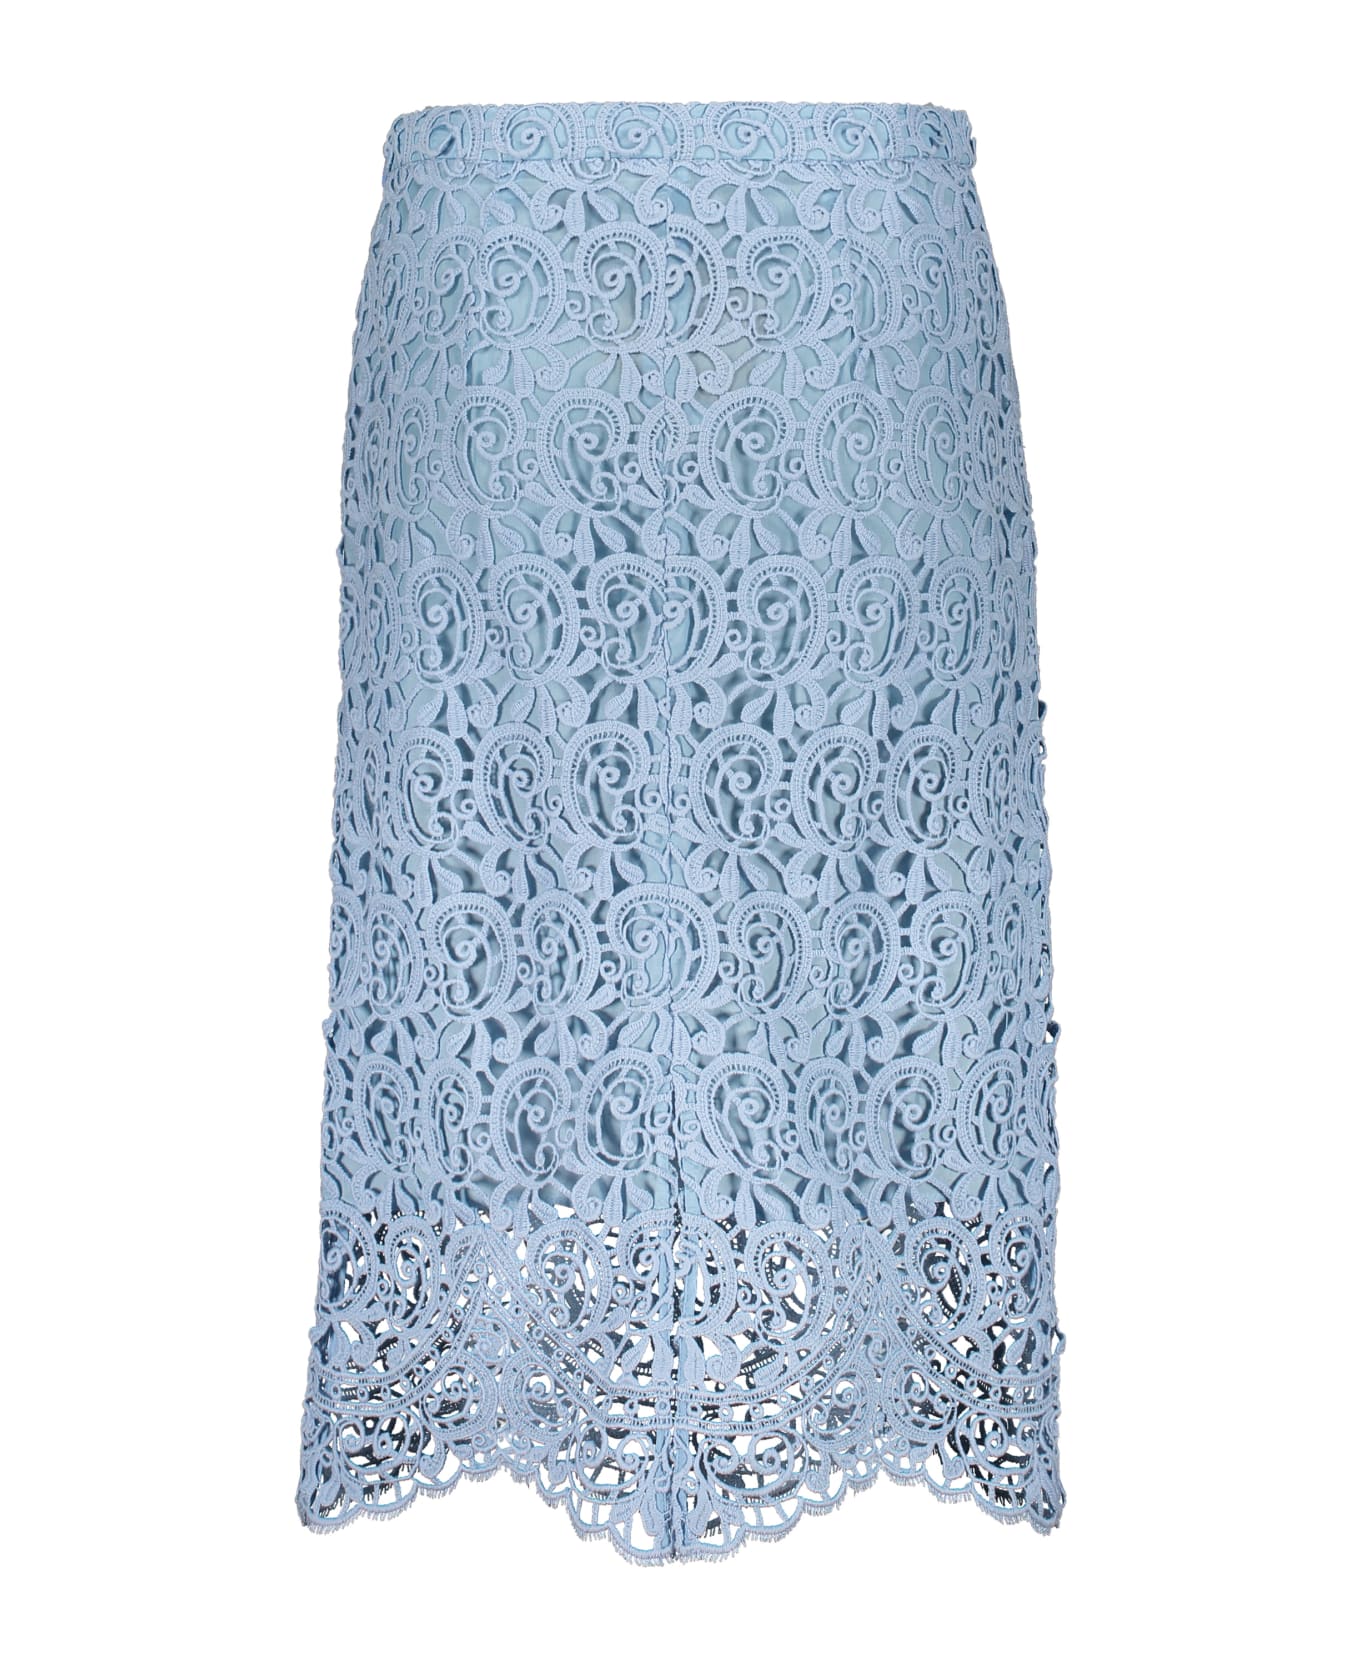 Burberry Lace Skirt - Light Blue